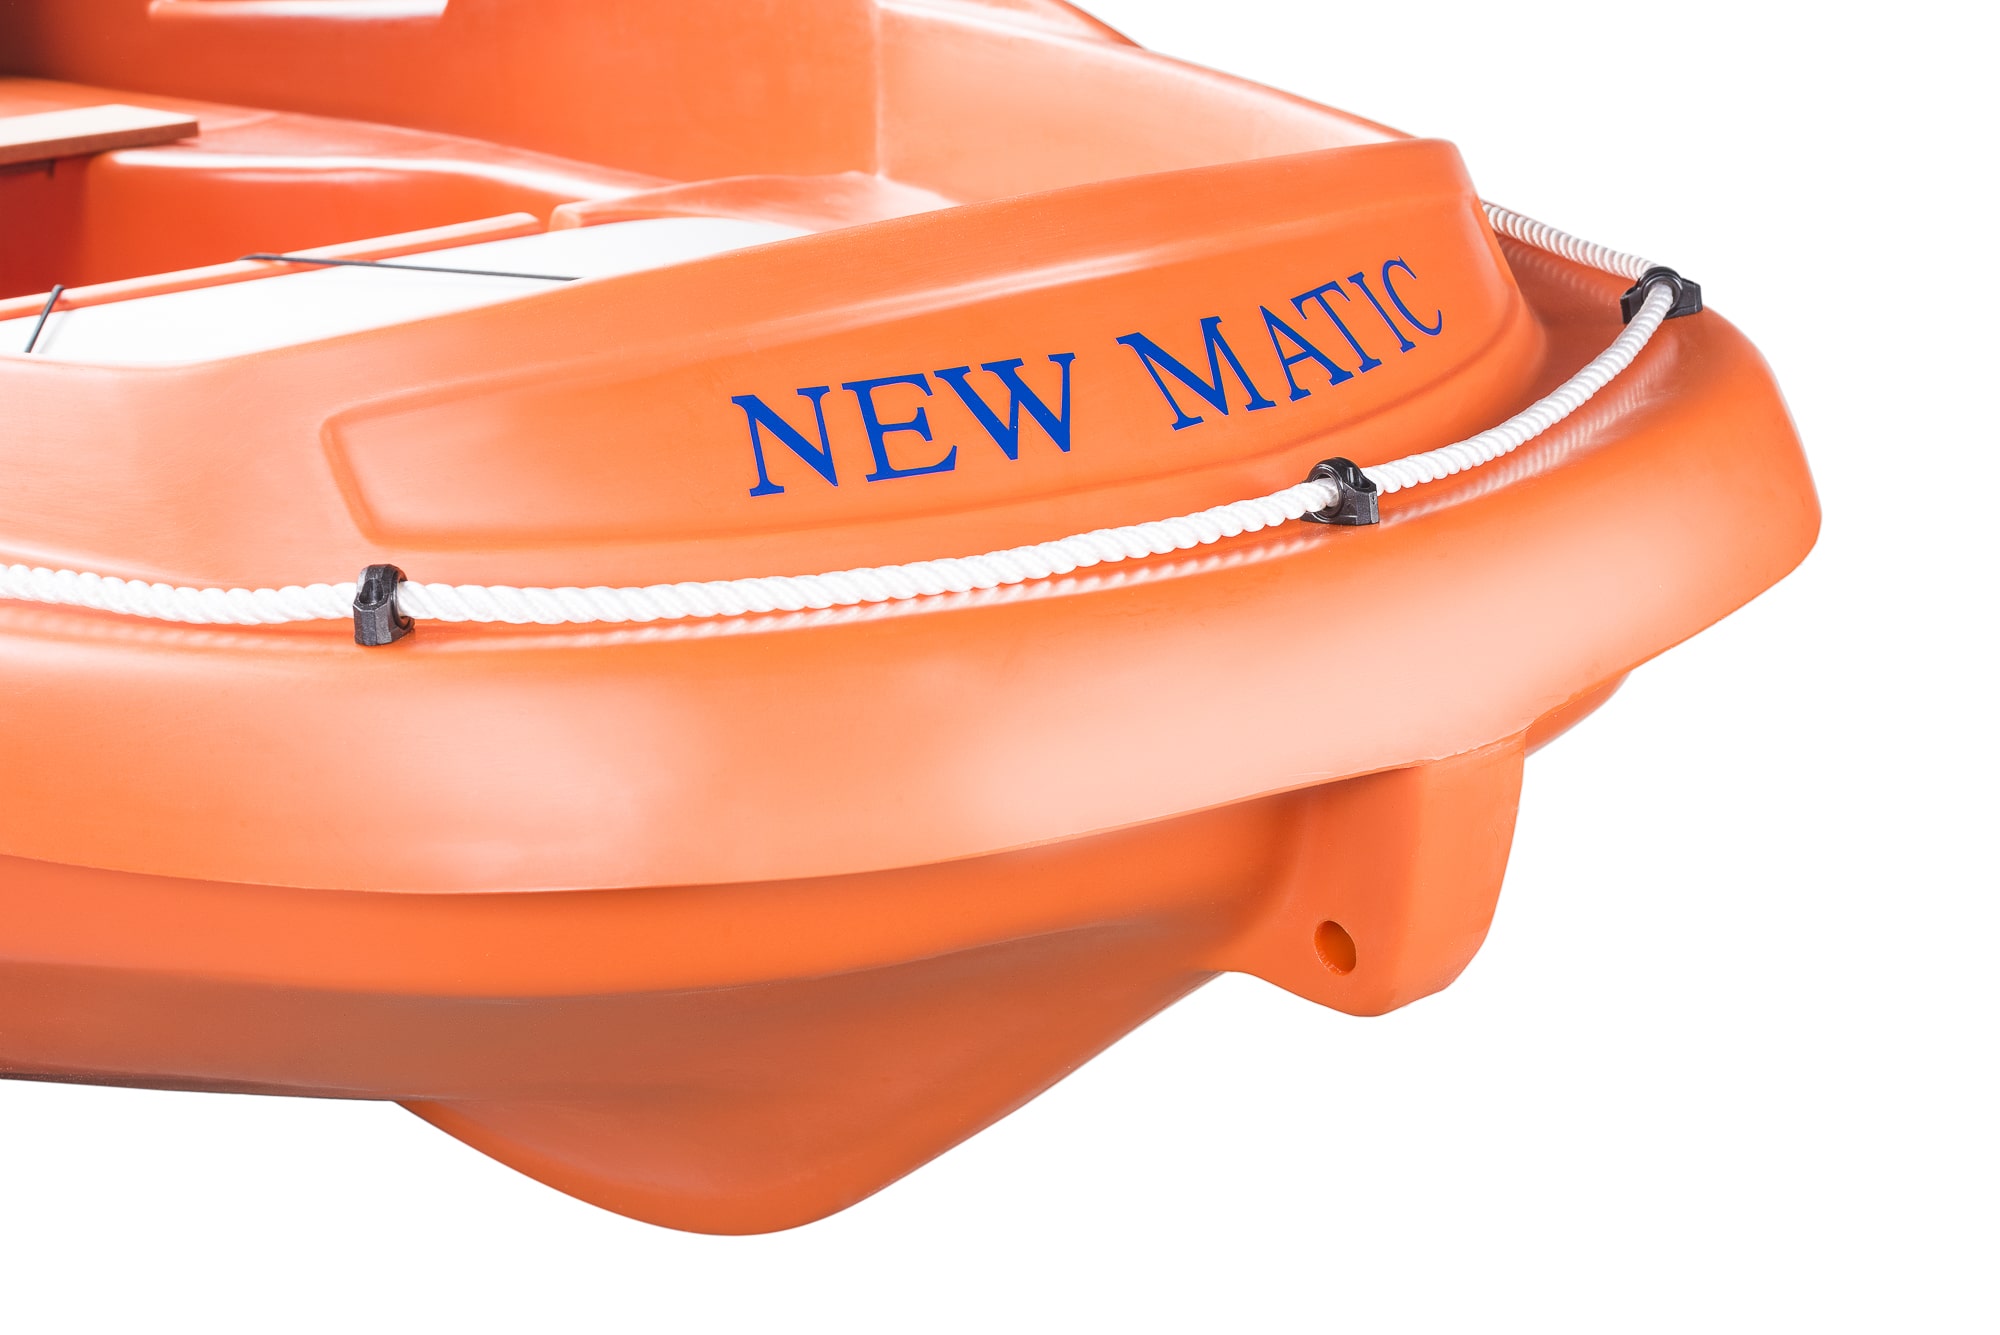 New Matic 360 - Anneau de remorquage et logo New Matic